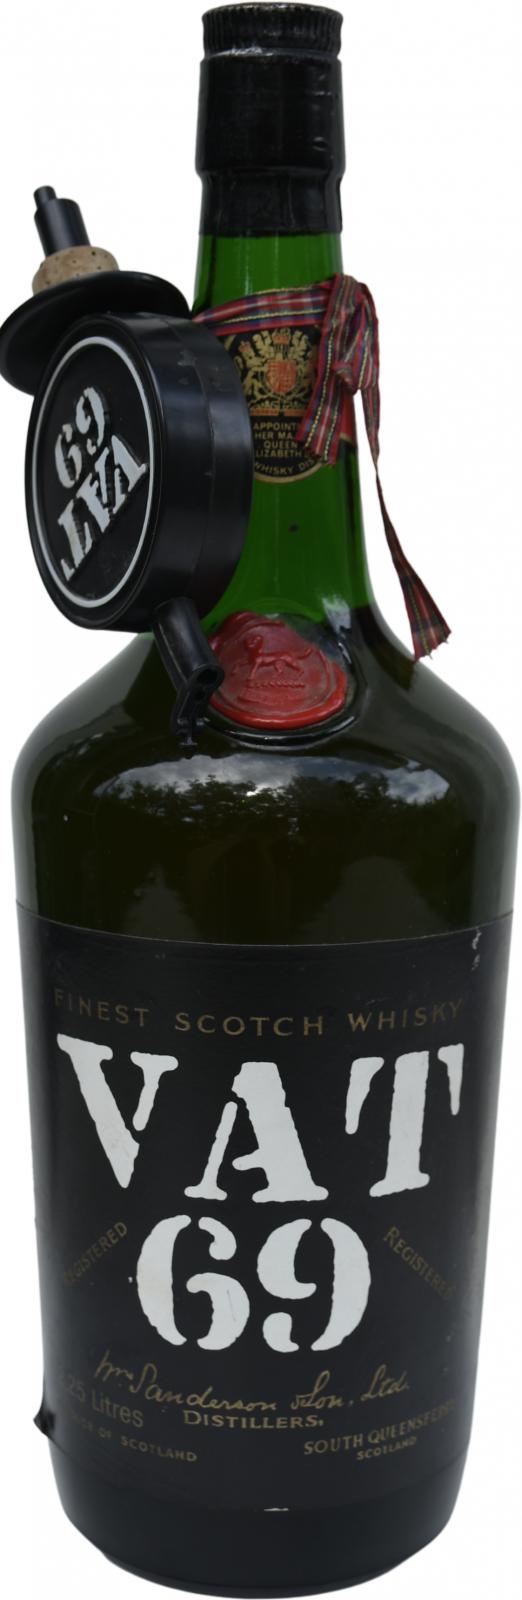 Vat 69 Finest Scotch Whisky Epikur GmbH Koblenz 43% 2250ml